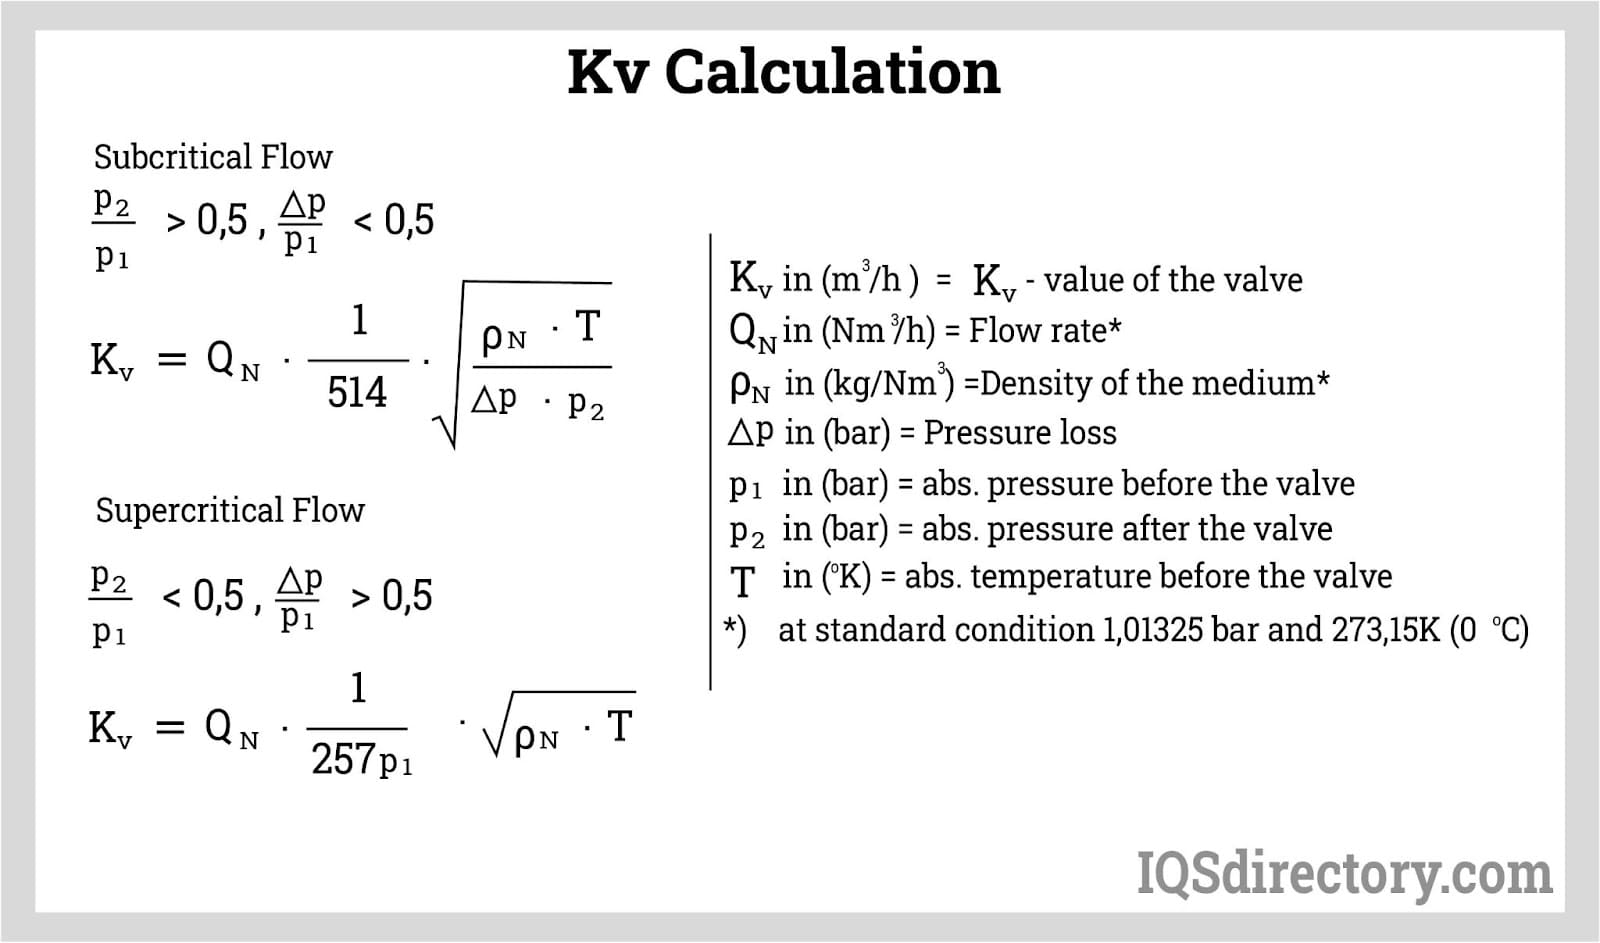 kv calculation